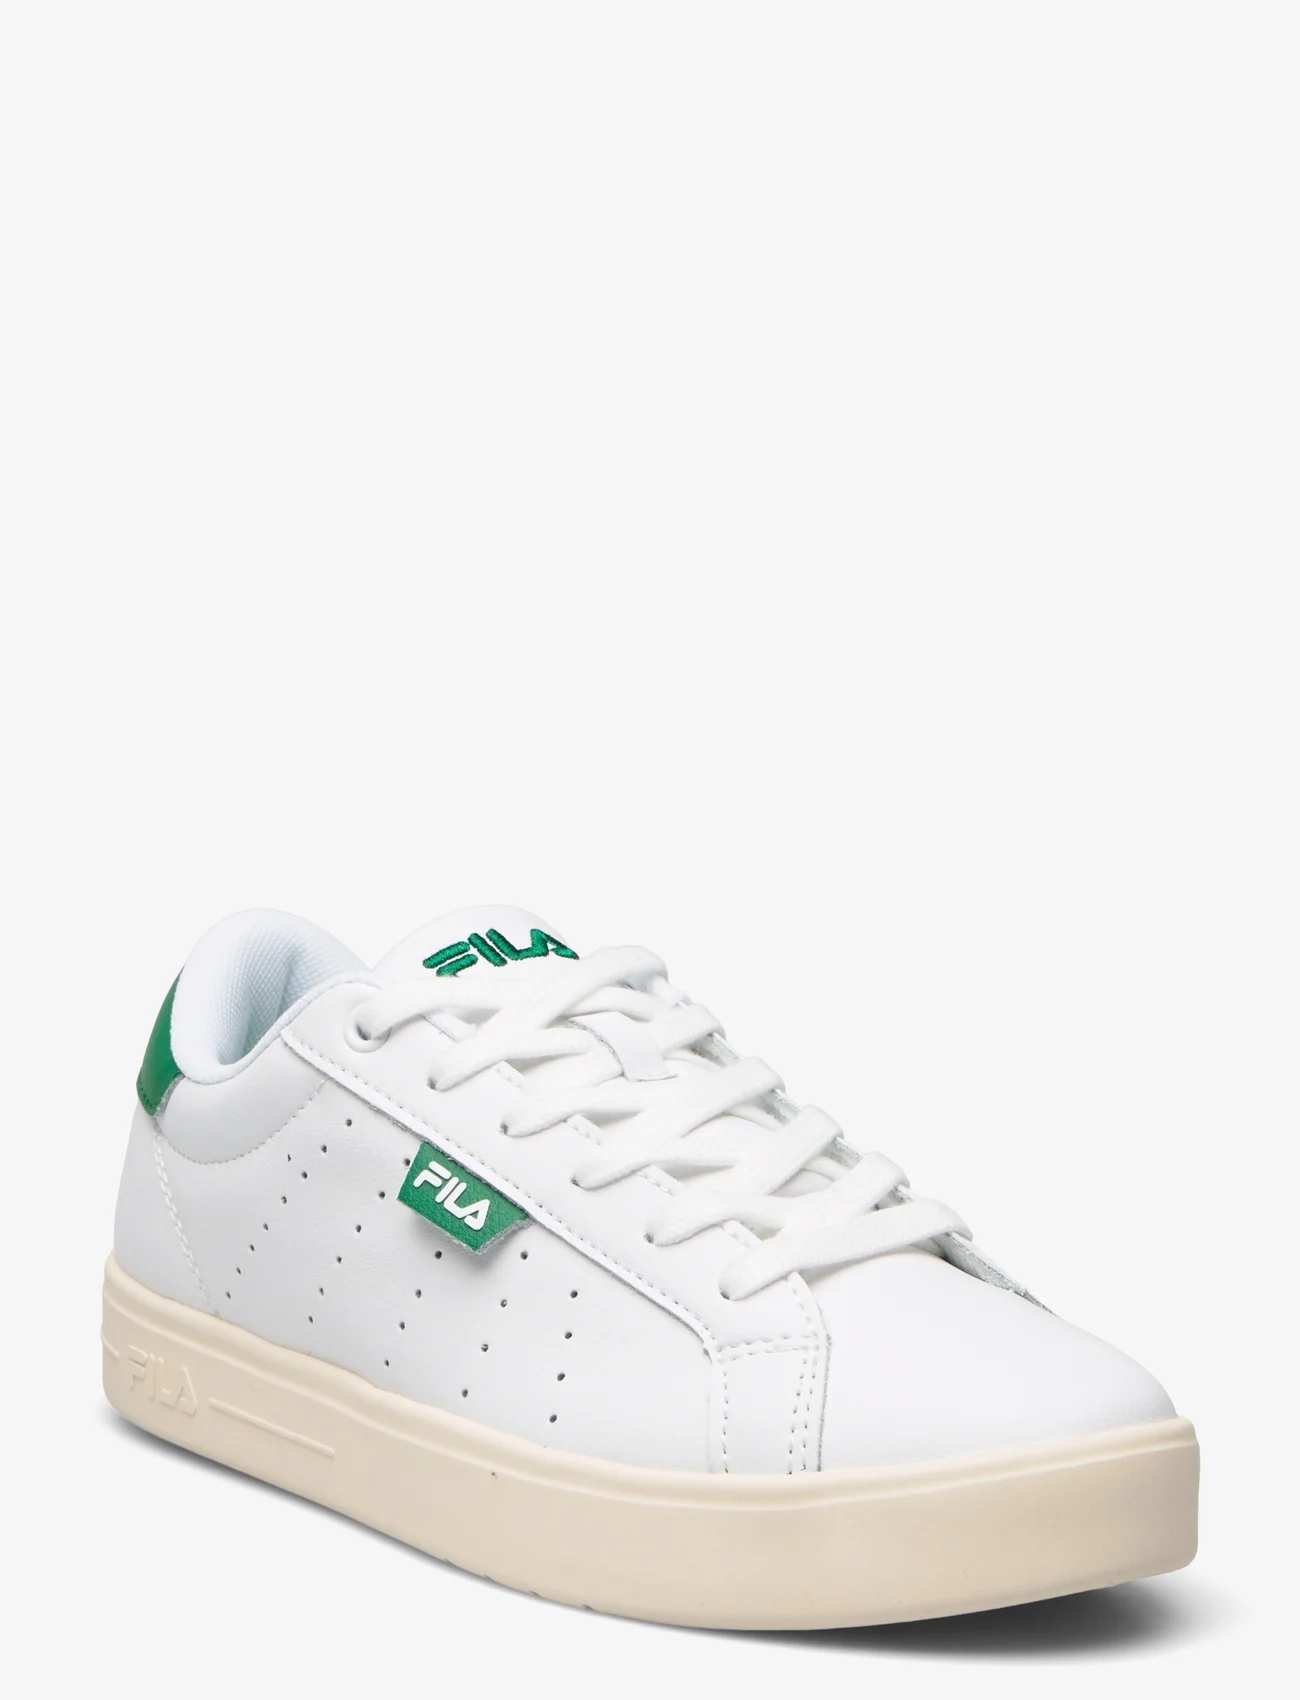 FILA - FILA LUSSO CB wmn - low top sneakers - white-verdant green - 0